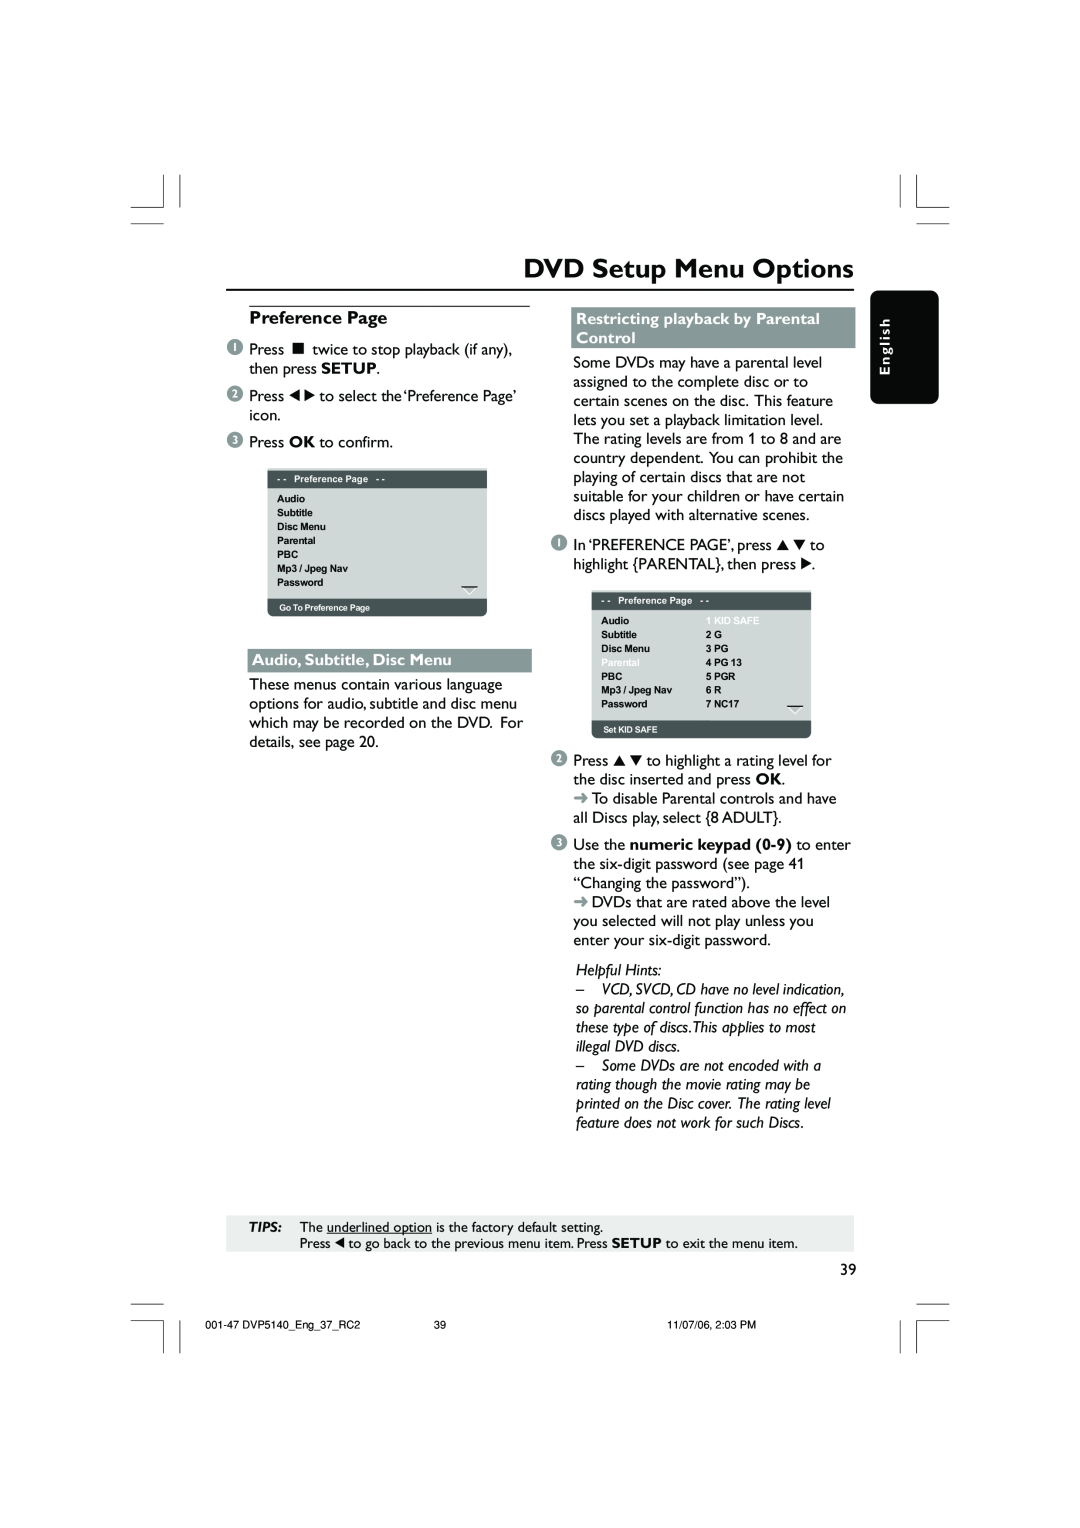 Philips DVP5140 Preference Page, DVD Setup Menu Options, Audio, Subtitle, Disc Menu, Helpful Hints, E n g l i s h 